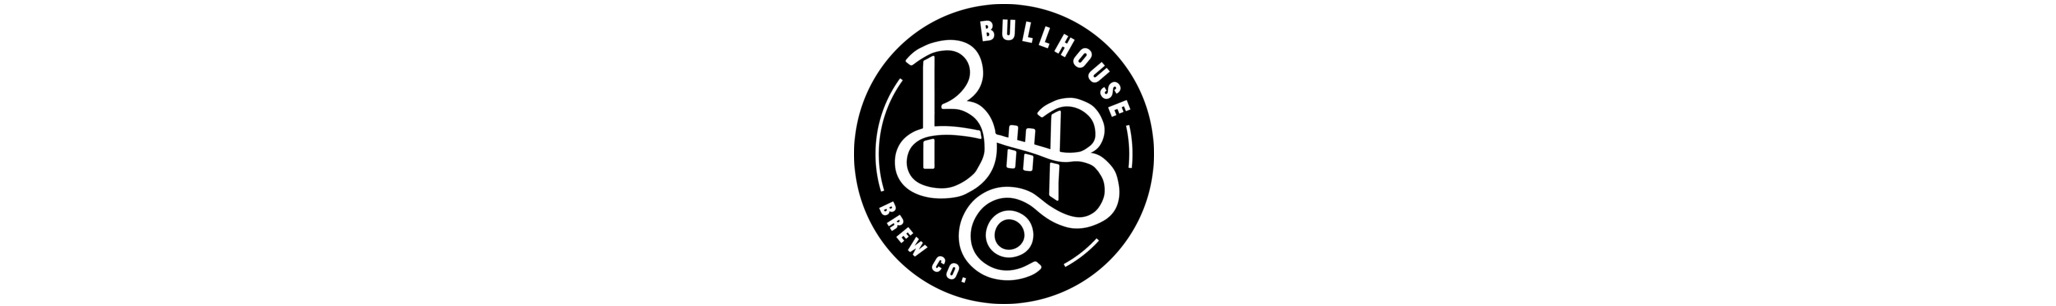 Bullhouse Brewing Company